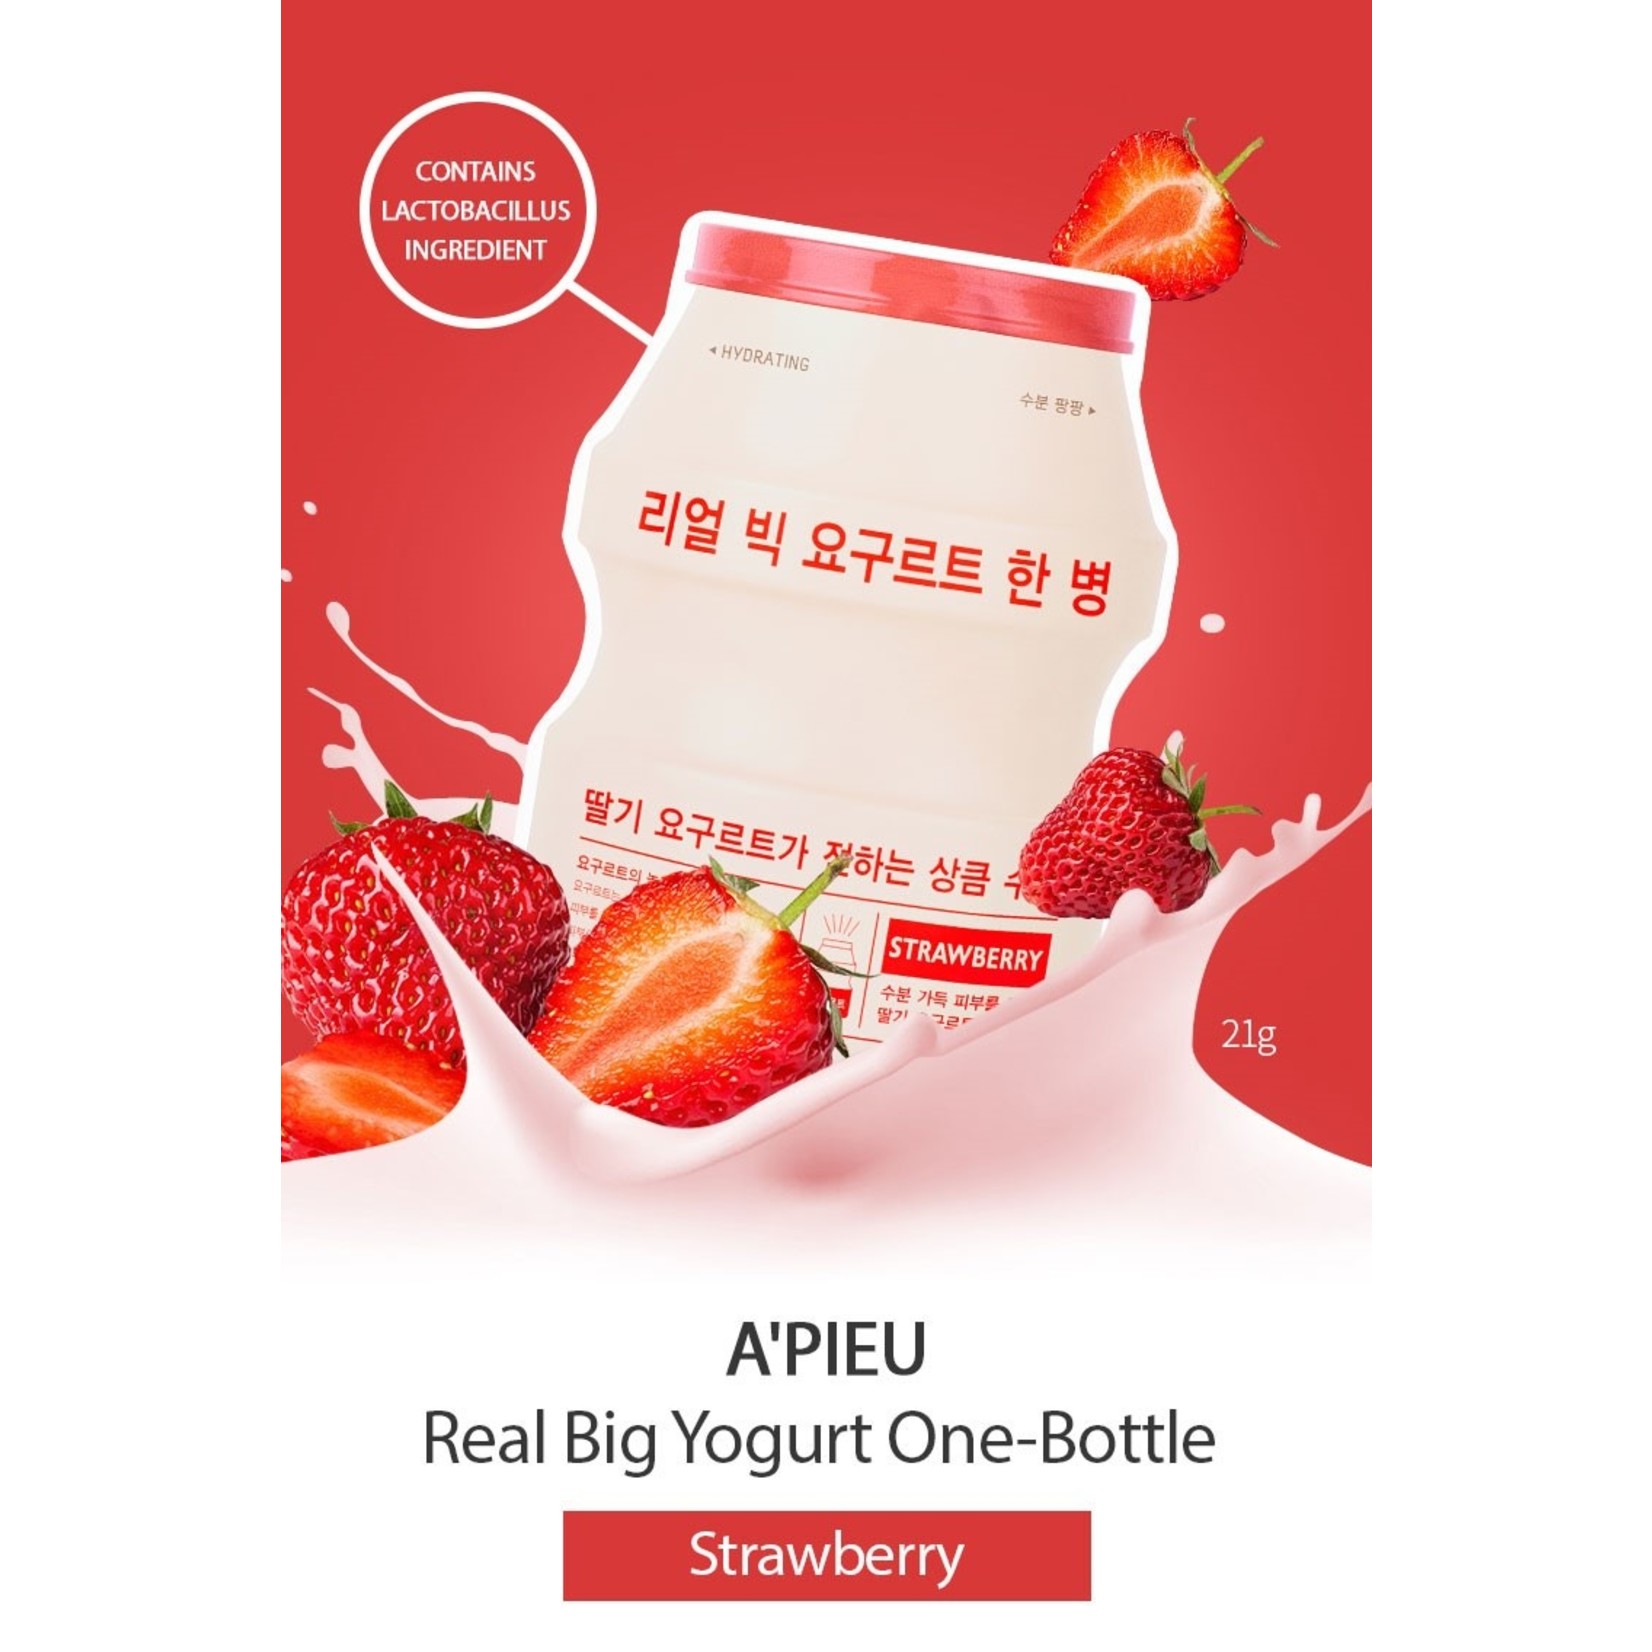 A'PIEU Real Big Yogurt One-Bottle #Strawberry